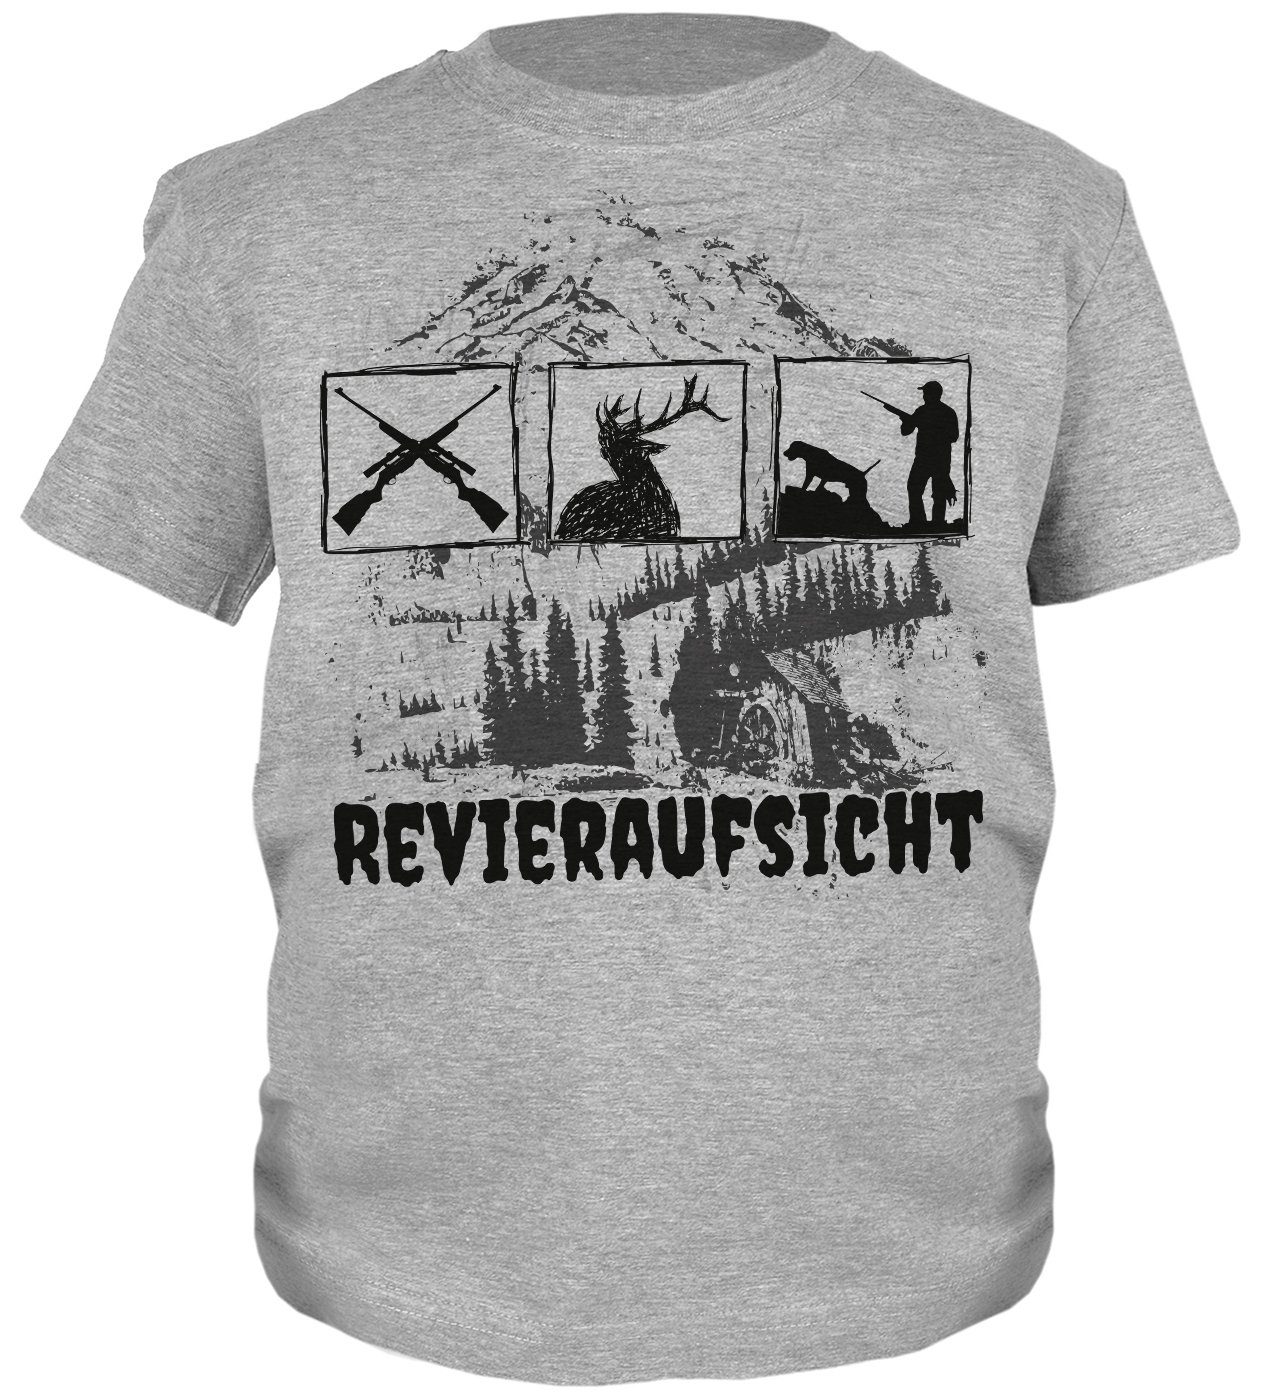 Shirts Kind Tini Hirsch Shirt : Jäger Kinder T-Shirt Jagdmotiv Revieraufsicht -